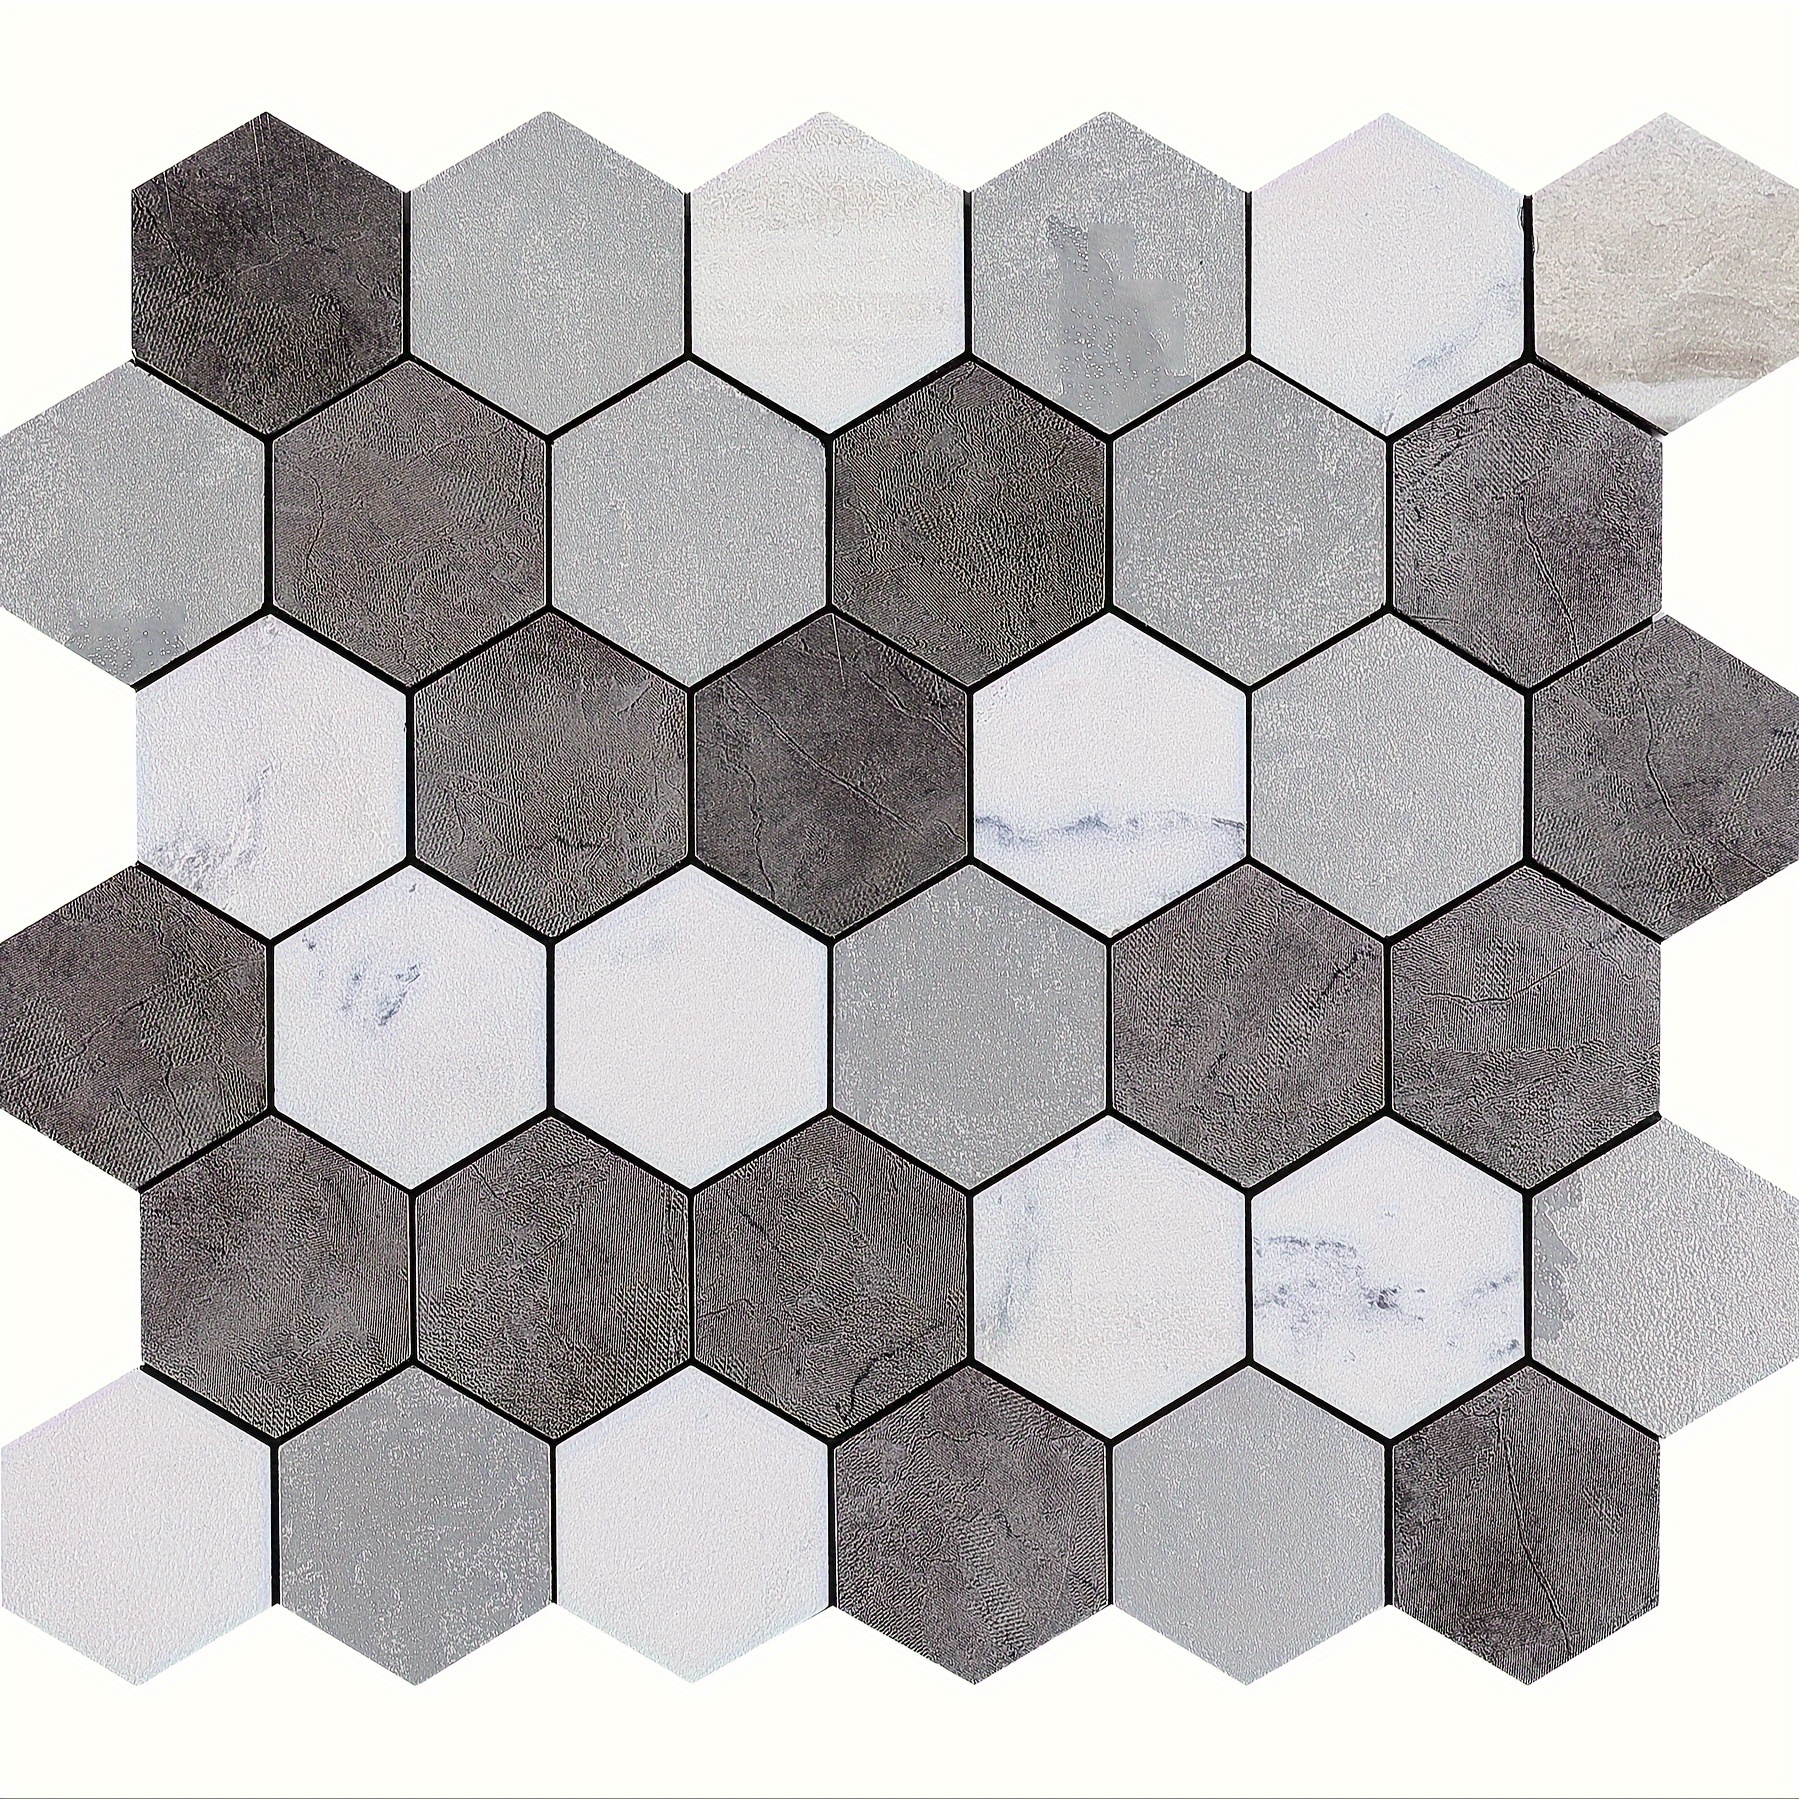 Blue Gray Hexagon Glass Marble Mosaic